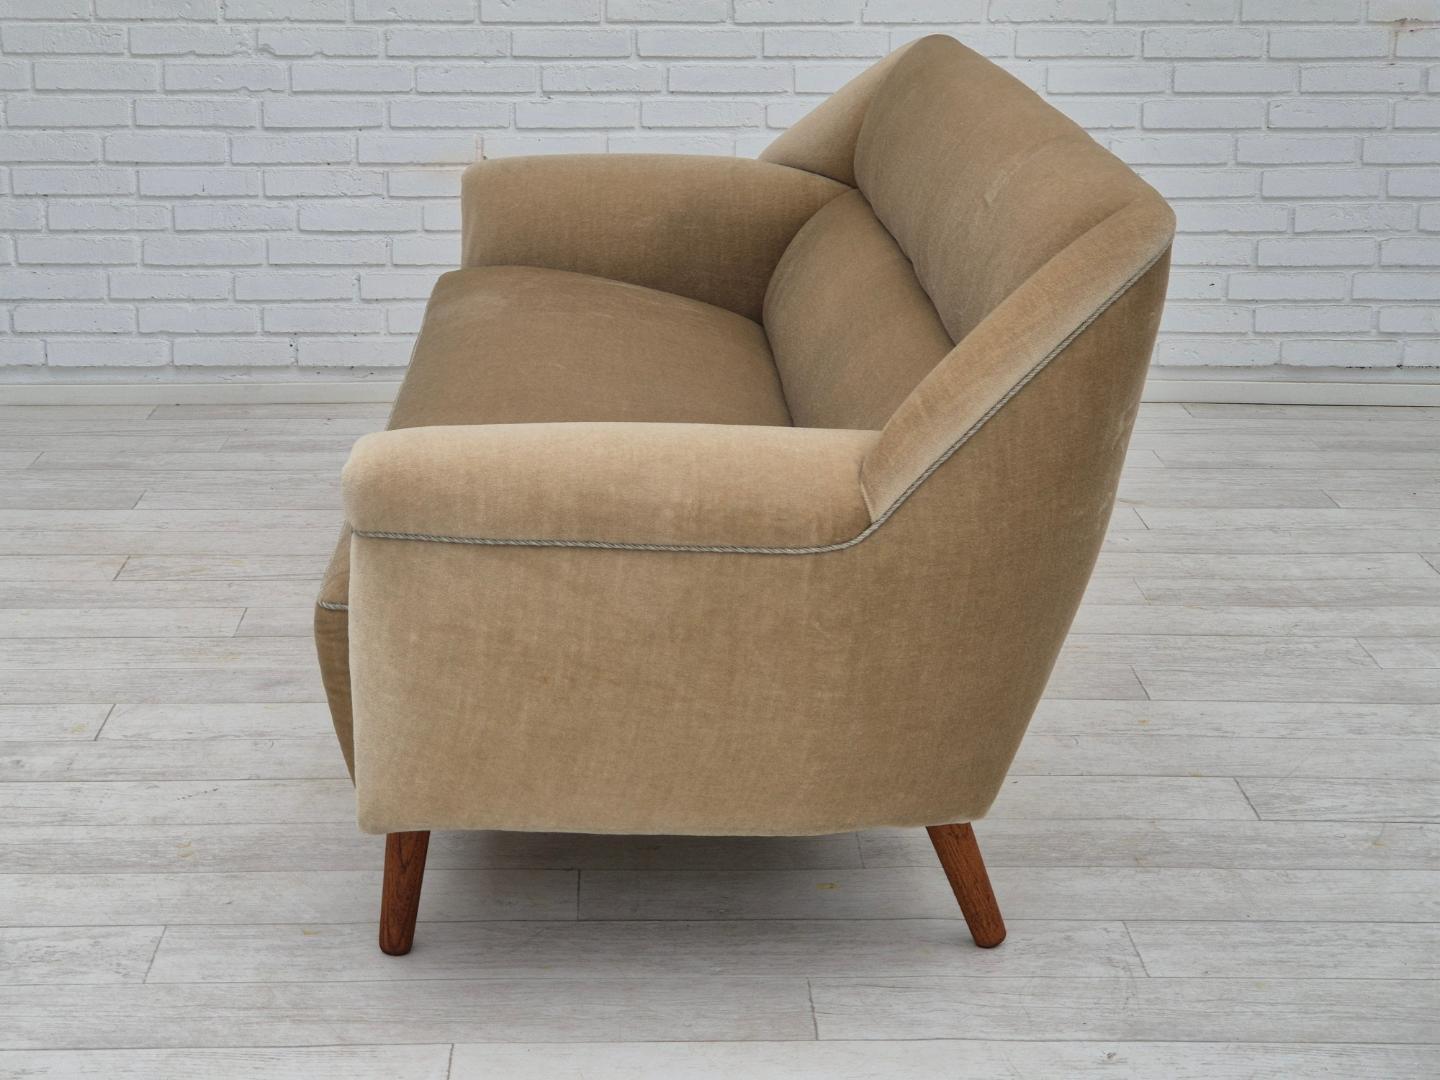 1960s, Danish design by Kurt Østervig for Rolschau Møbler, 3 seater sofa, model 57, original condition.